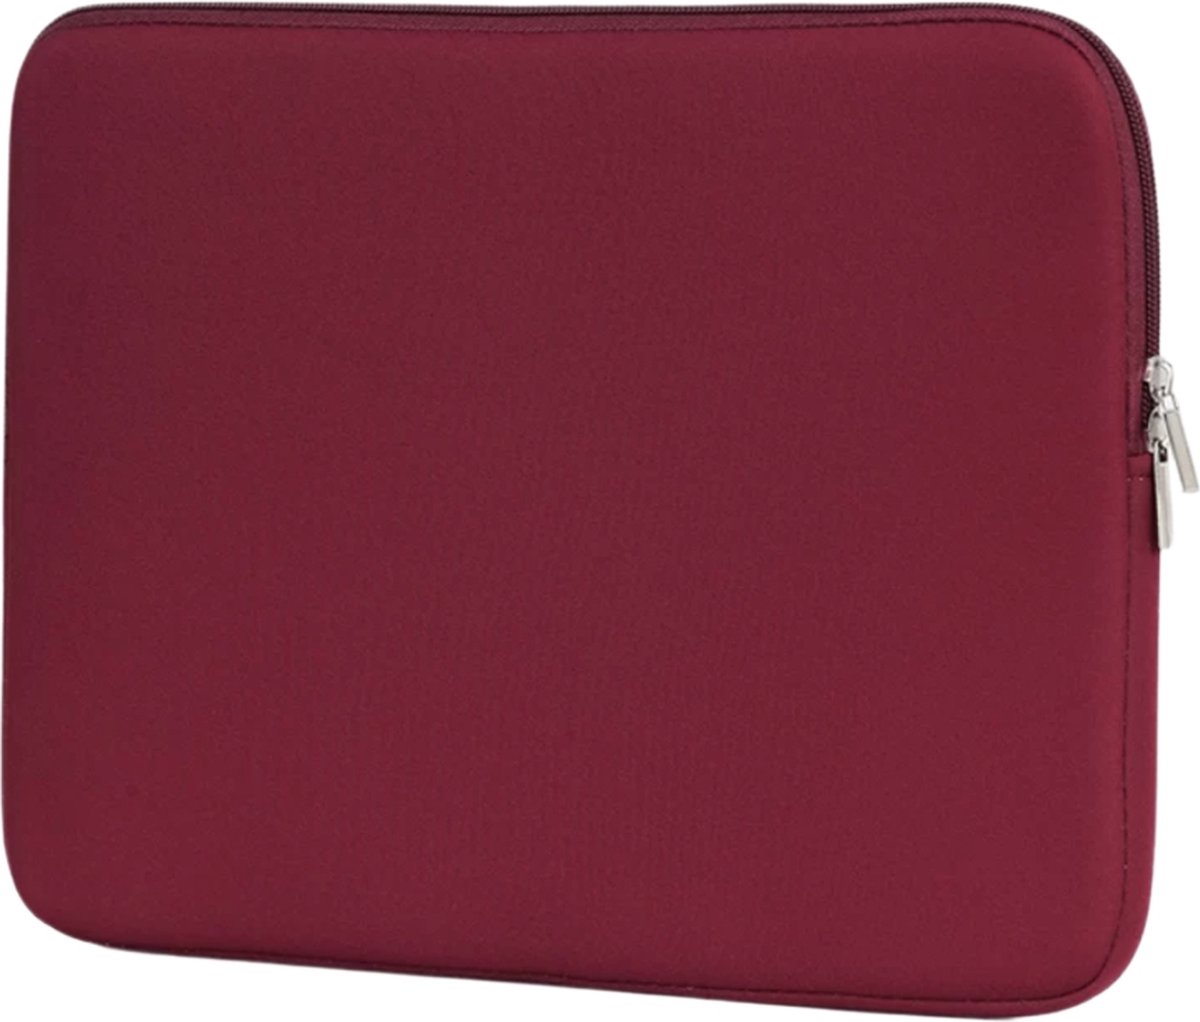 Dunne laptopsleeve – verschillende laptops – 14,6 inch - bordeaux rood- Schokproof - Dubbele Ritssluiting